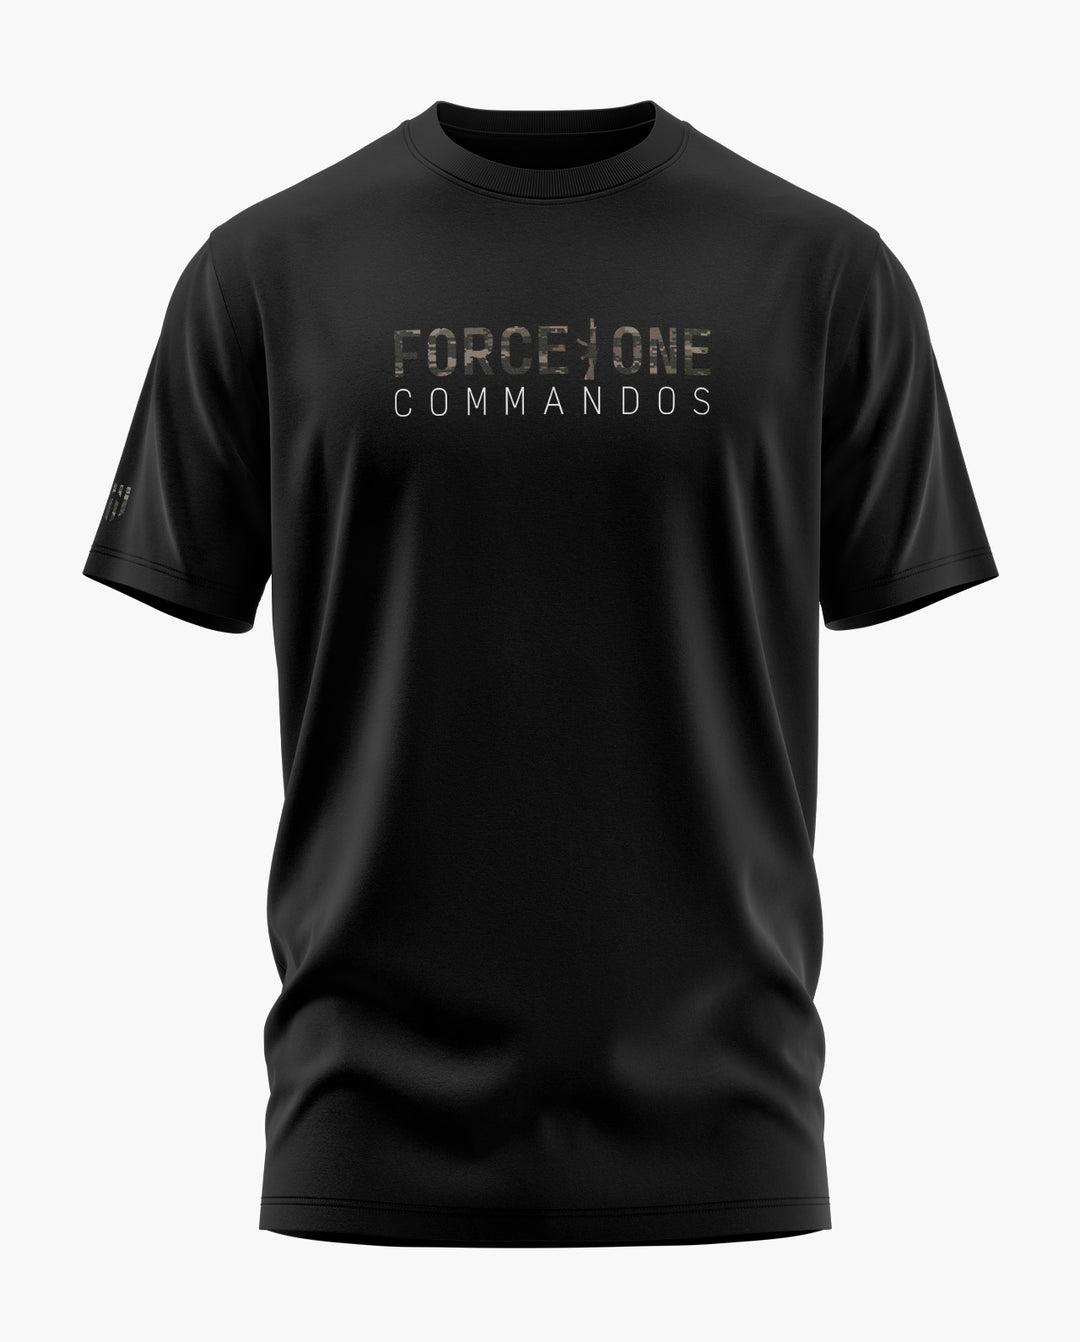 FORCE ONE COMMANDOS T-Shirt